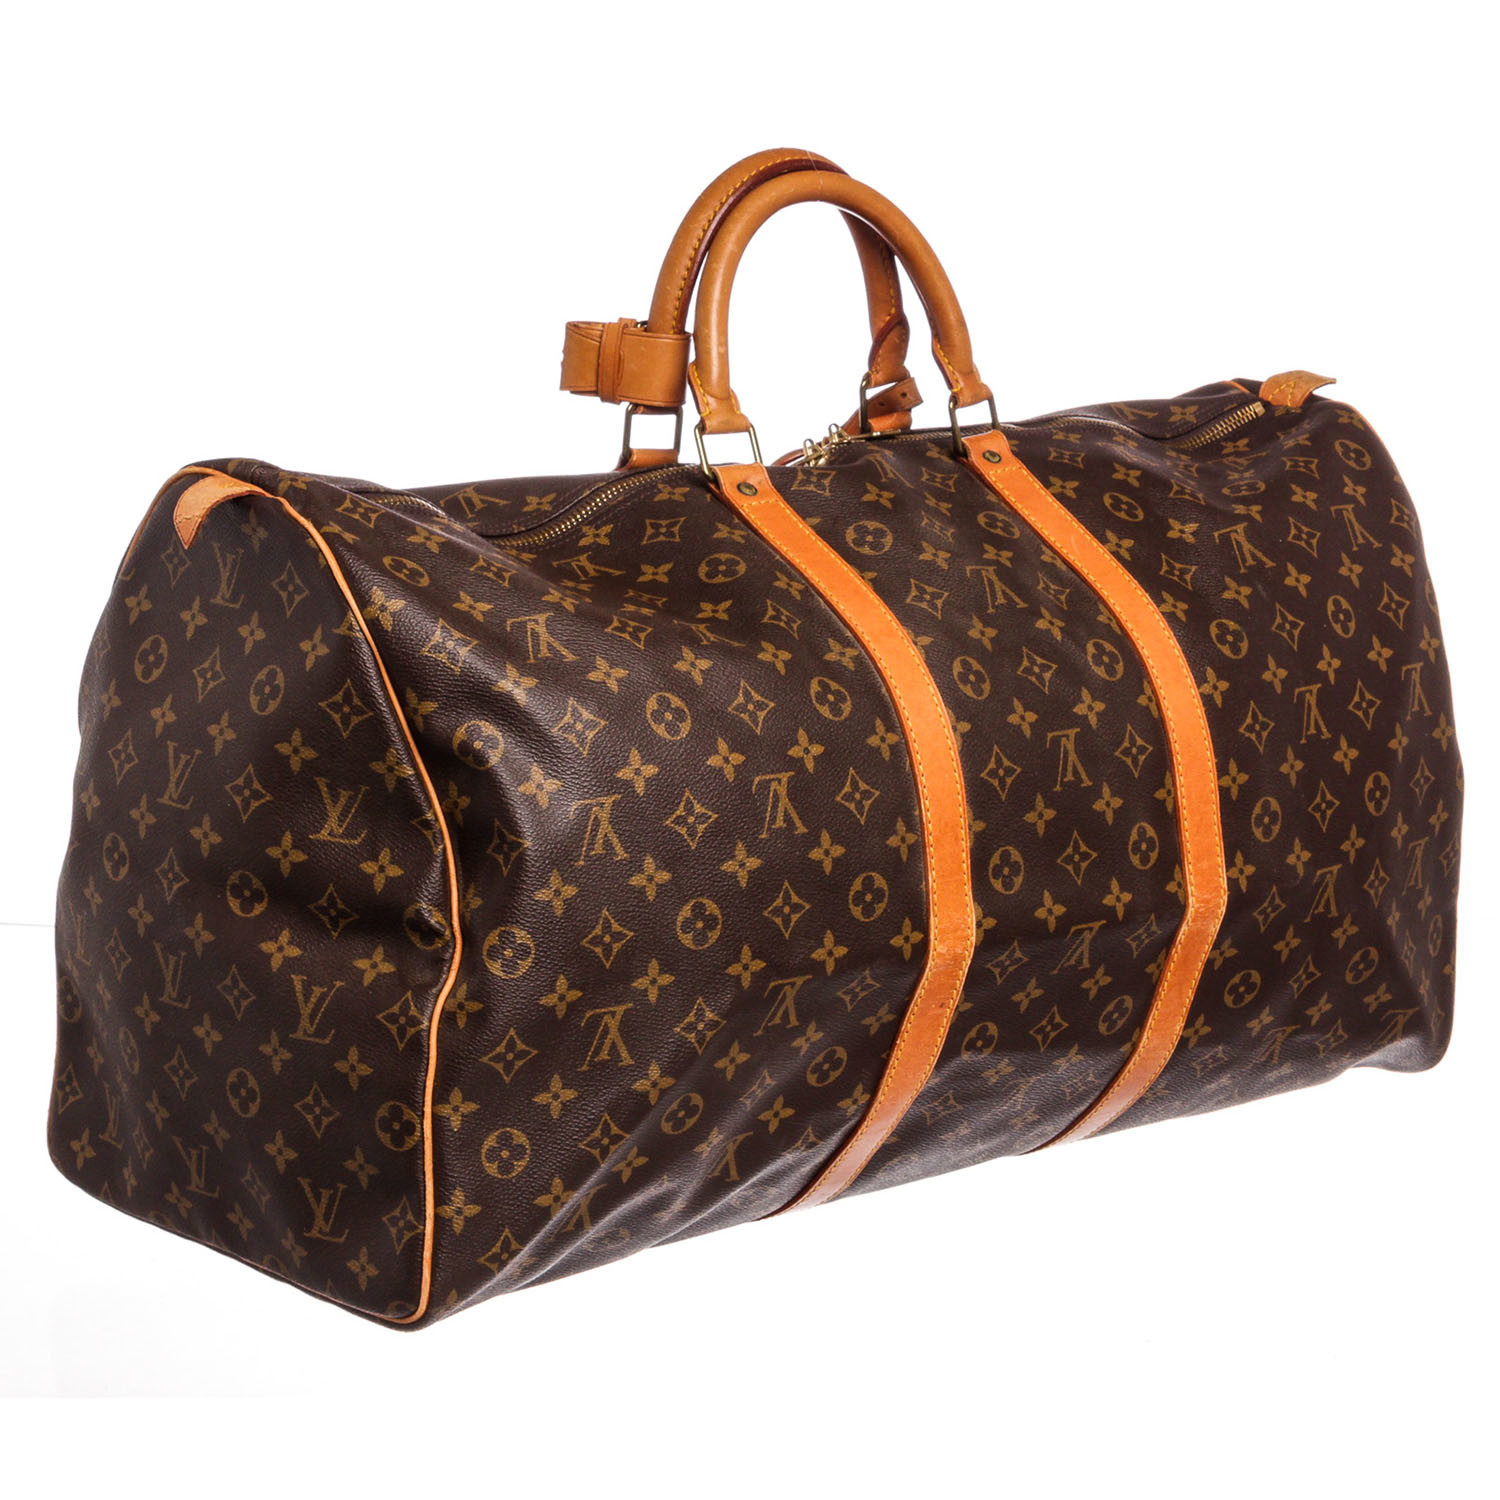 Most Expensive Louis Vuitton Duffle Bag | NAR Media Kit